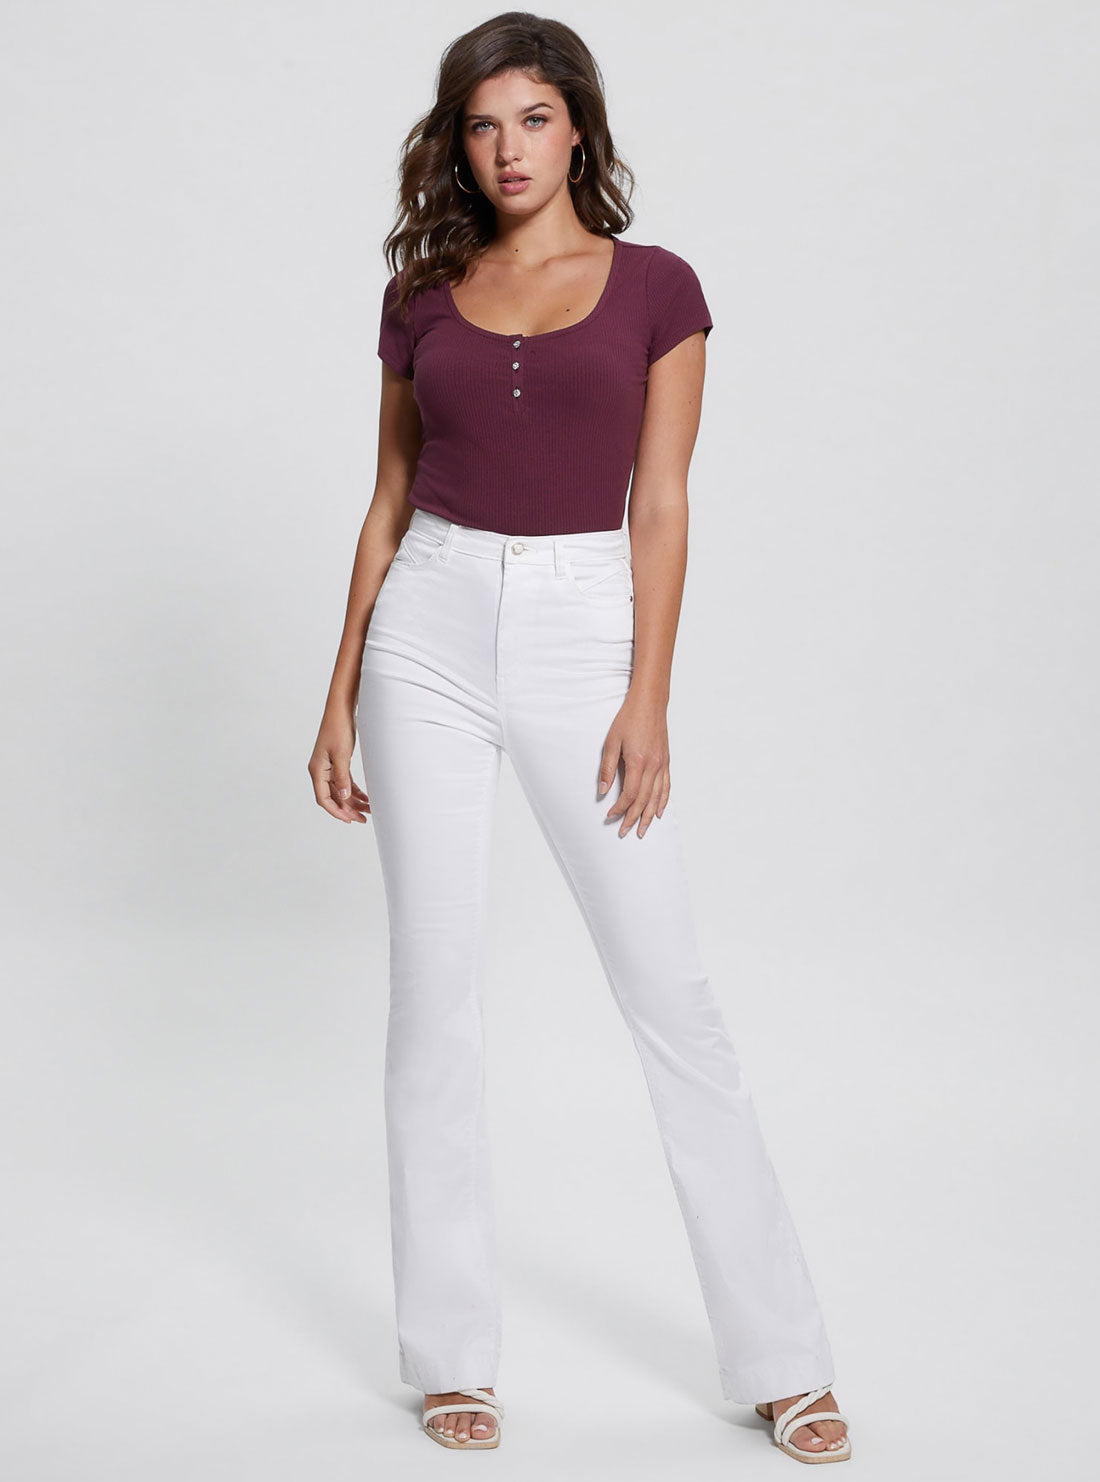 Eco Purple Karlee Jewel Henley T-Shirt | GUESS Women's Apparel | full view